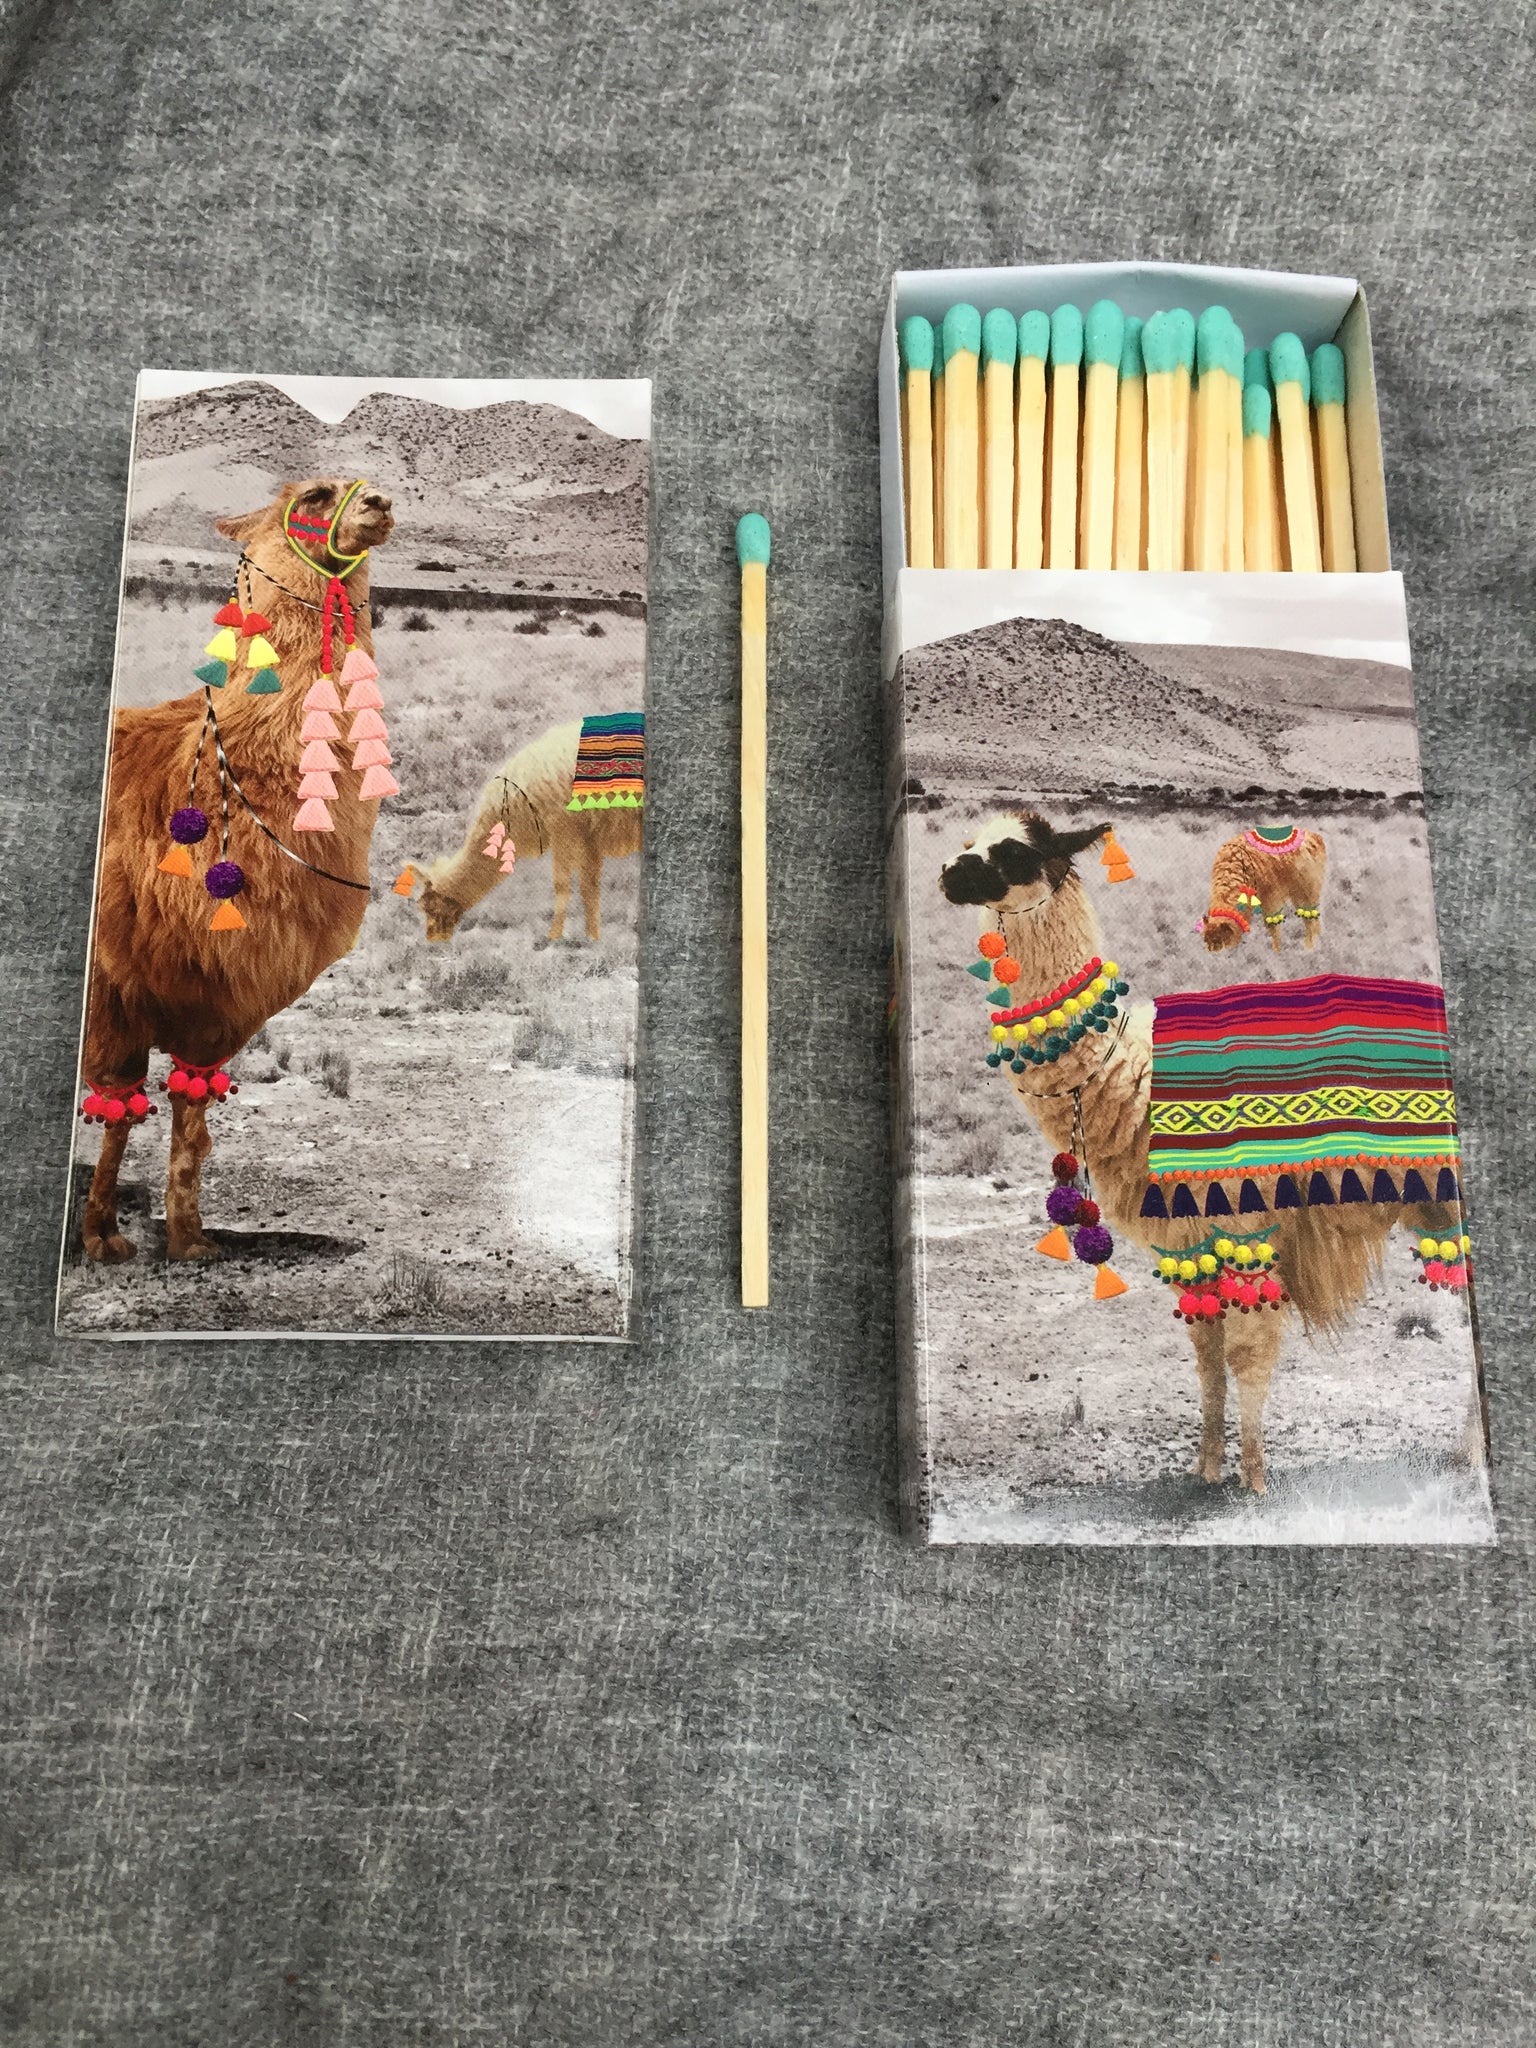 Llama Matches